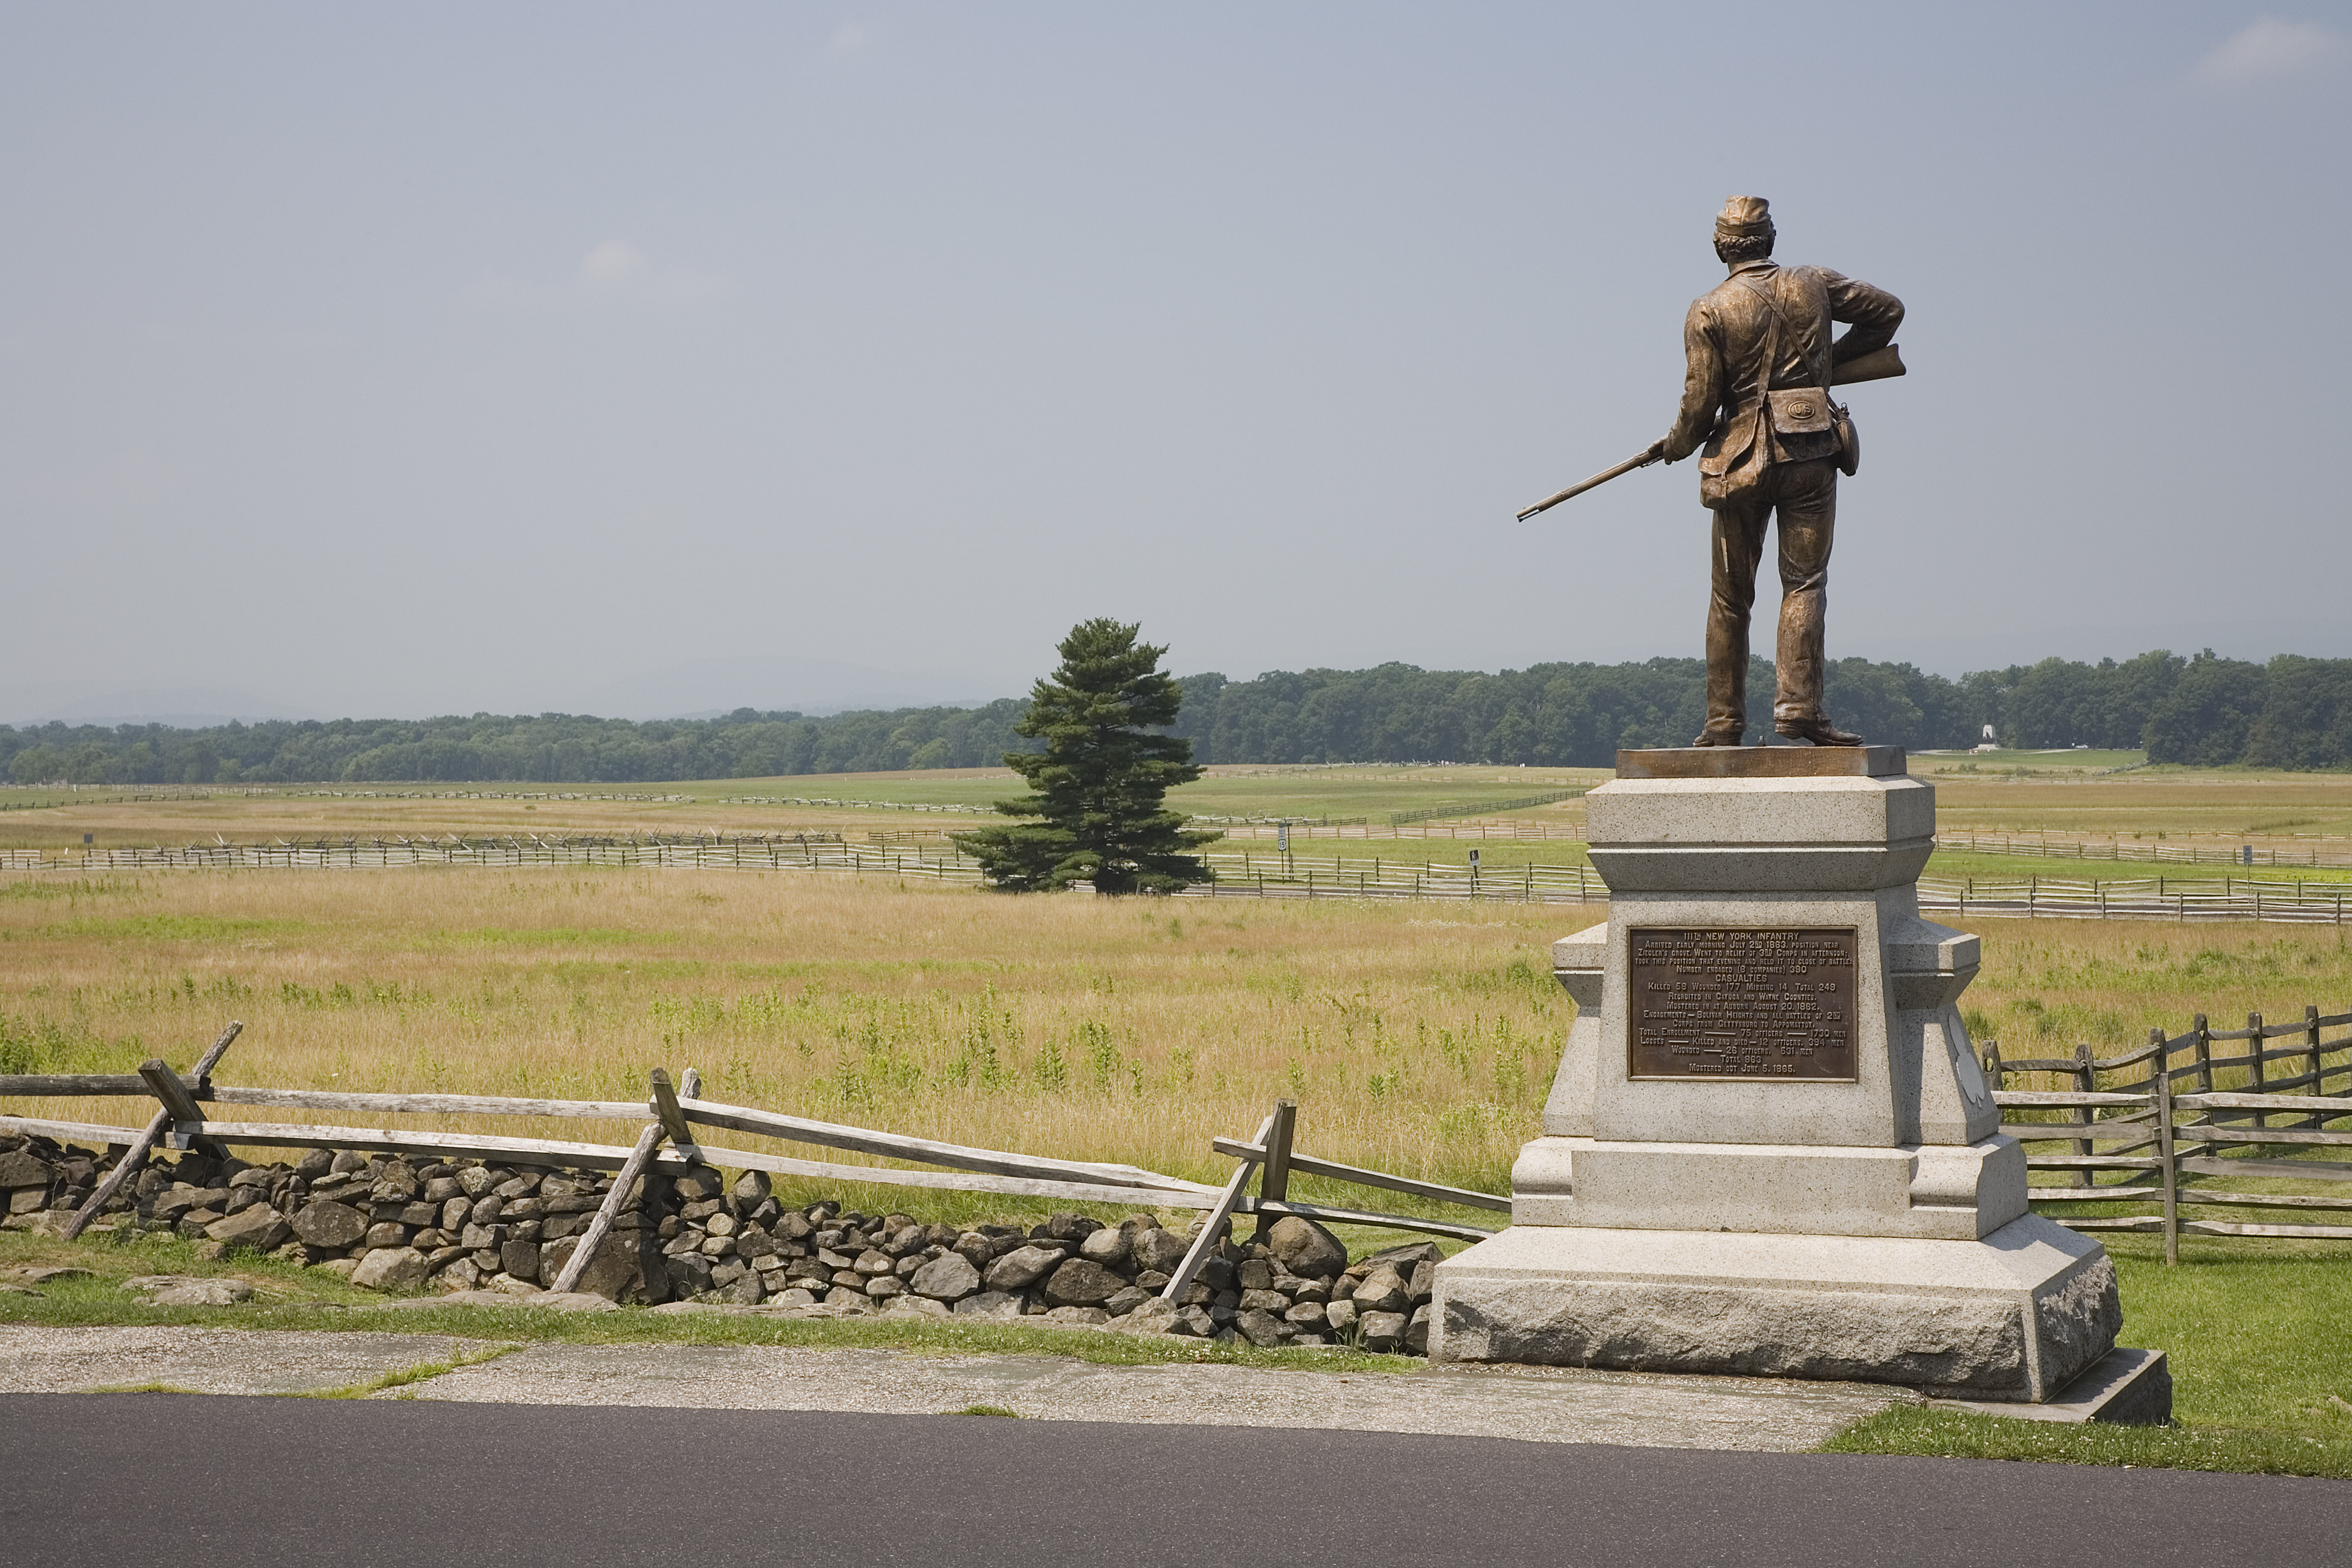 Gettysburg Pictures - Civil War - HISTORY.com